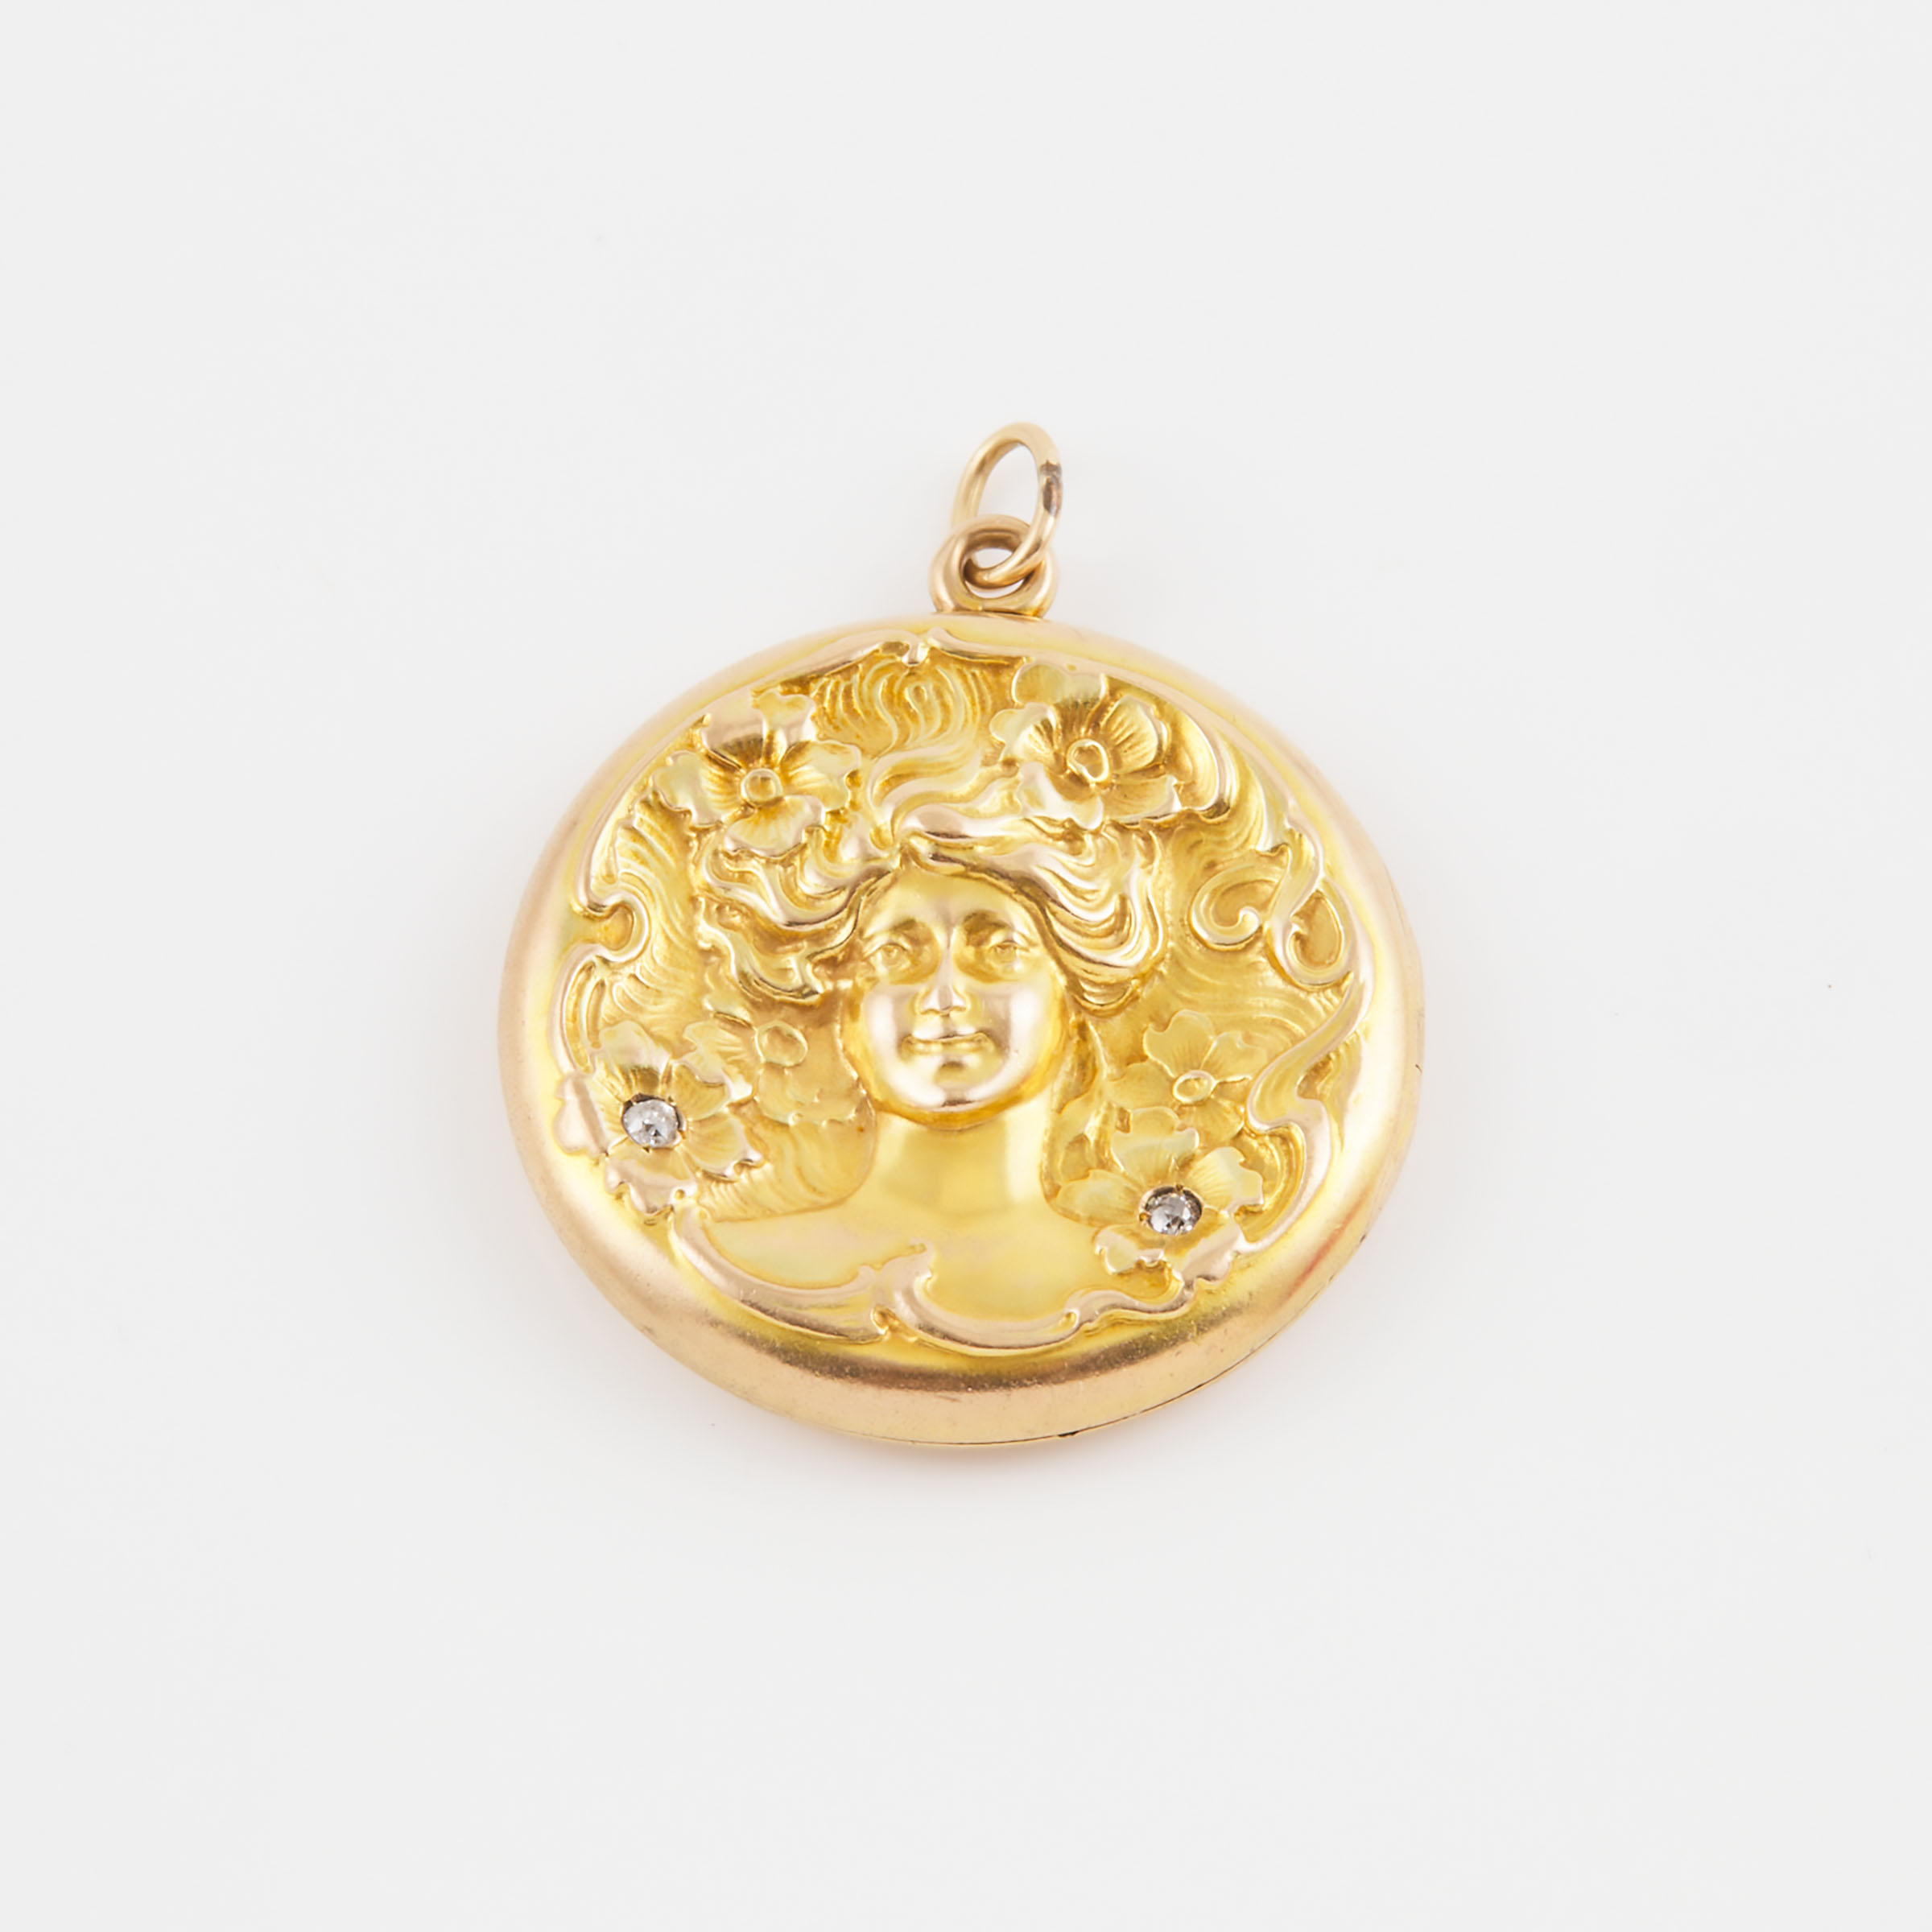 Art Nouveau Style 14k Yellow Gold Circular Locket